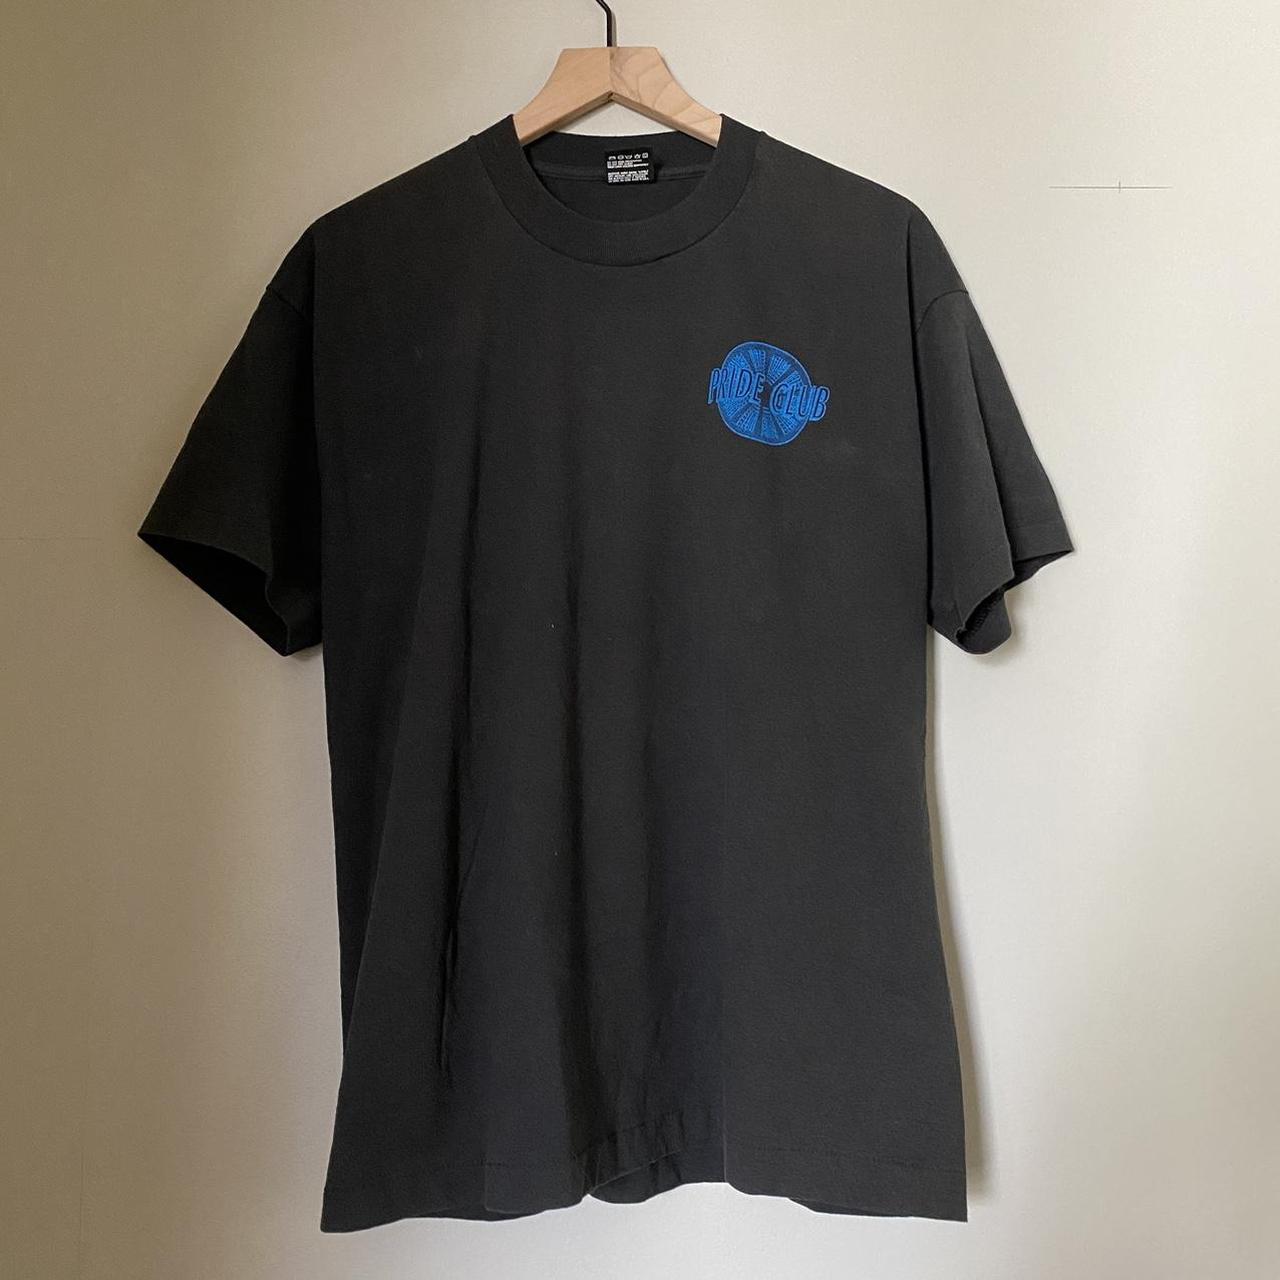 Hot Topic Men's Black and Blue T-shirt